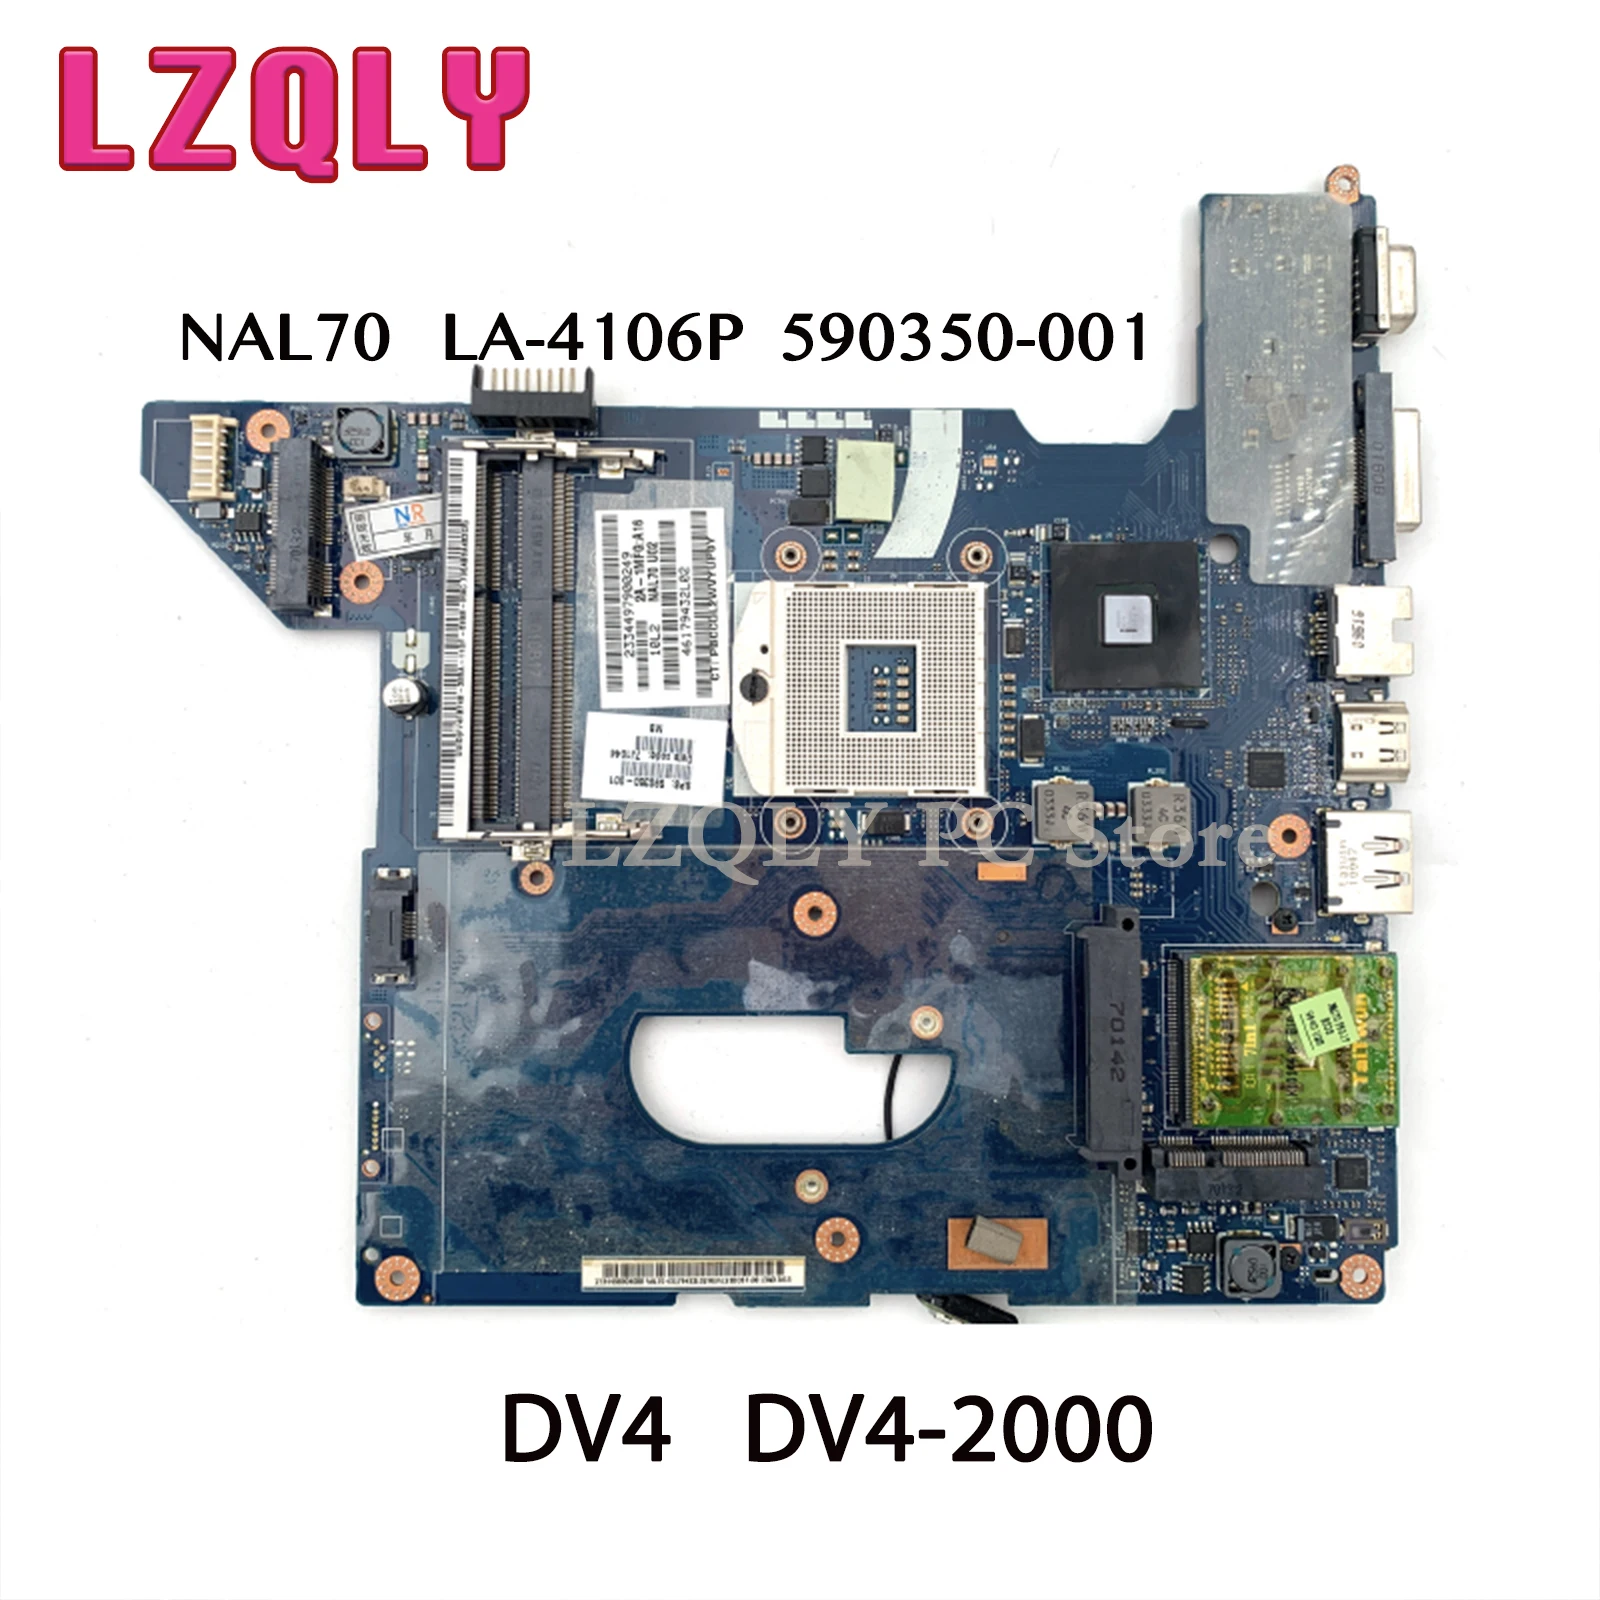 

LZQLY For HP Pavilion DV4 DV4-2000 NAL70 LA-4106P 590350-001 Laptop Motherboard HM55 UMA HD DDR3 Free CPU Fully Tested